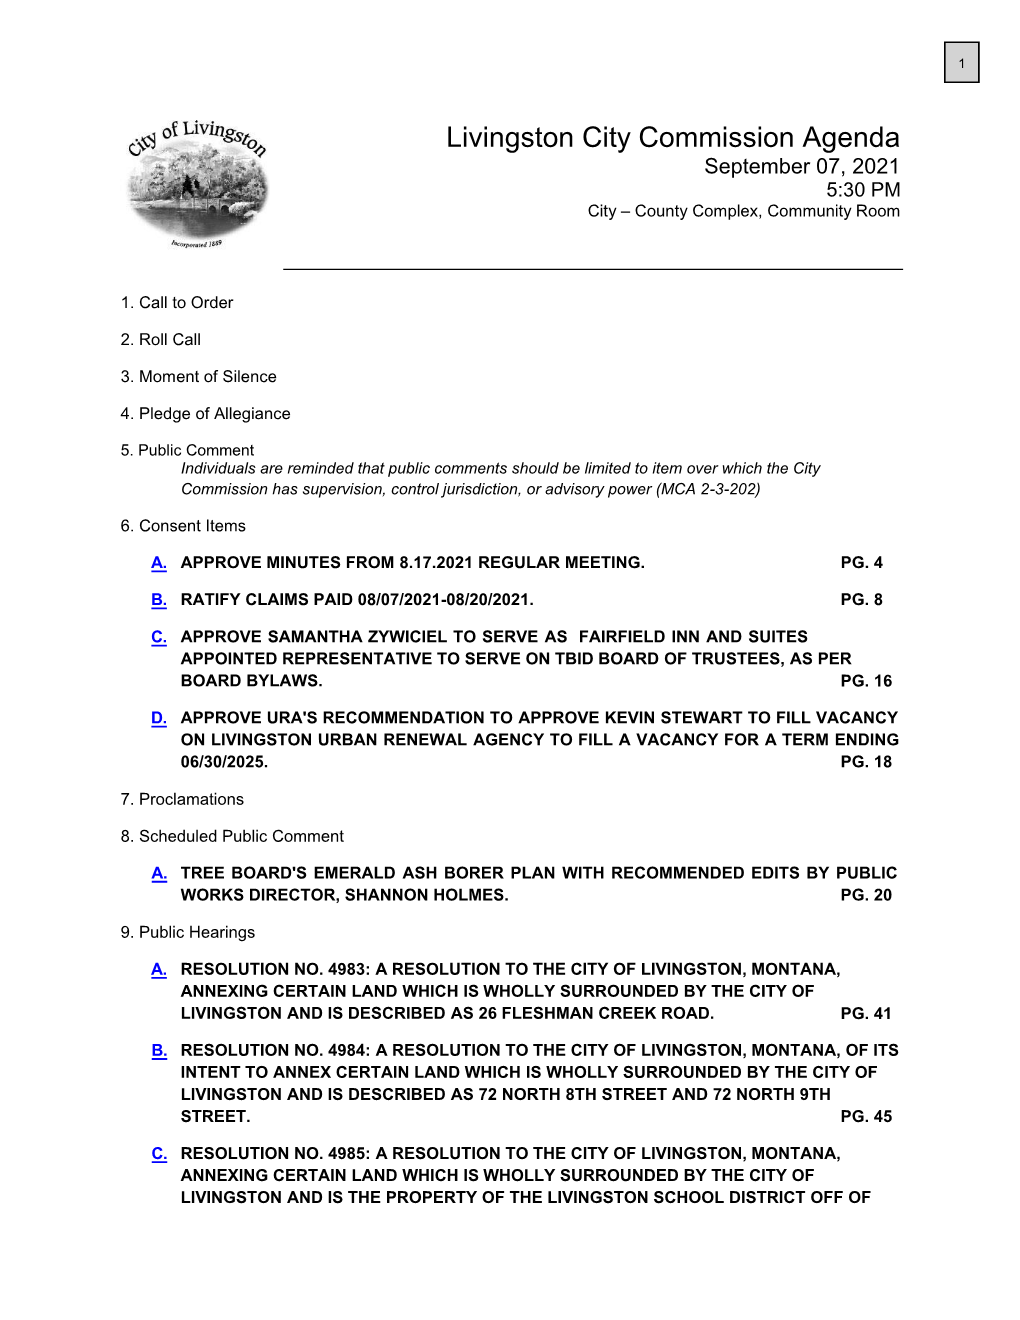 Livingston City Commission Agenda September 07, 2021 5:30 PM City – County Complex, Community Room